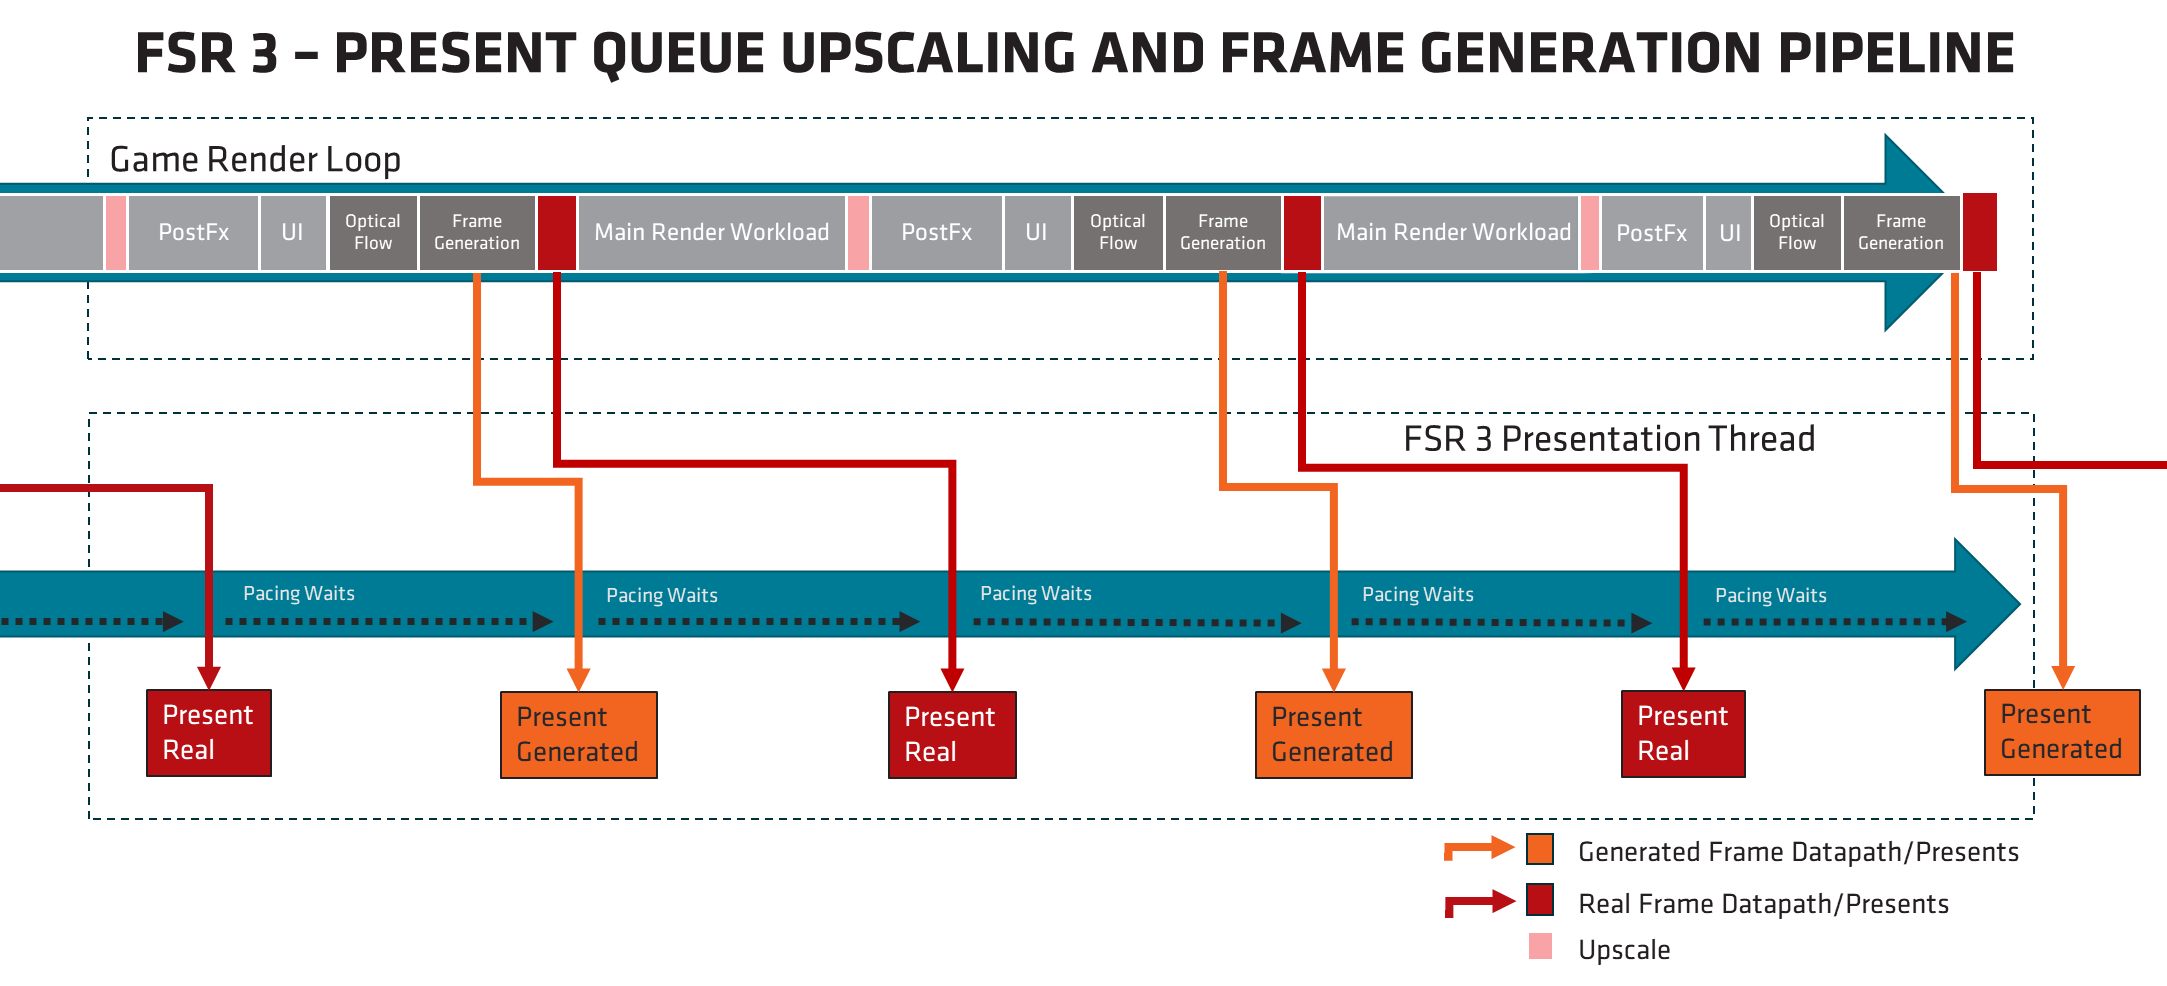 FSR 3 present queue, upscaling, frame generation pipeline